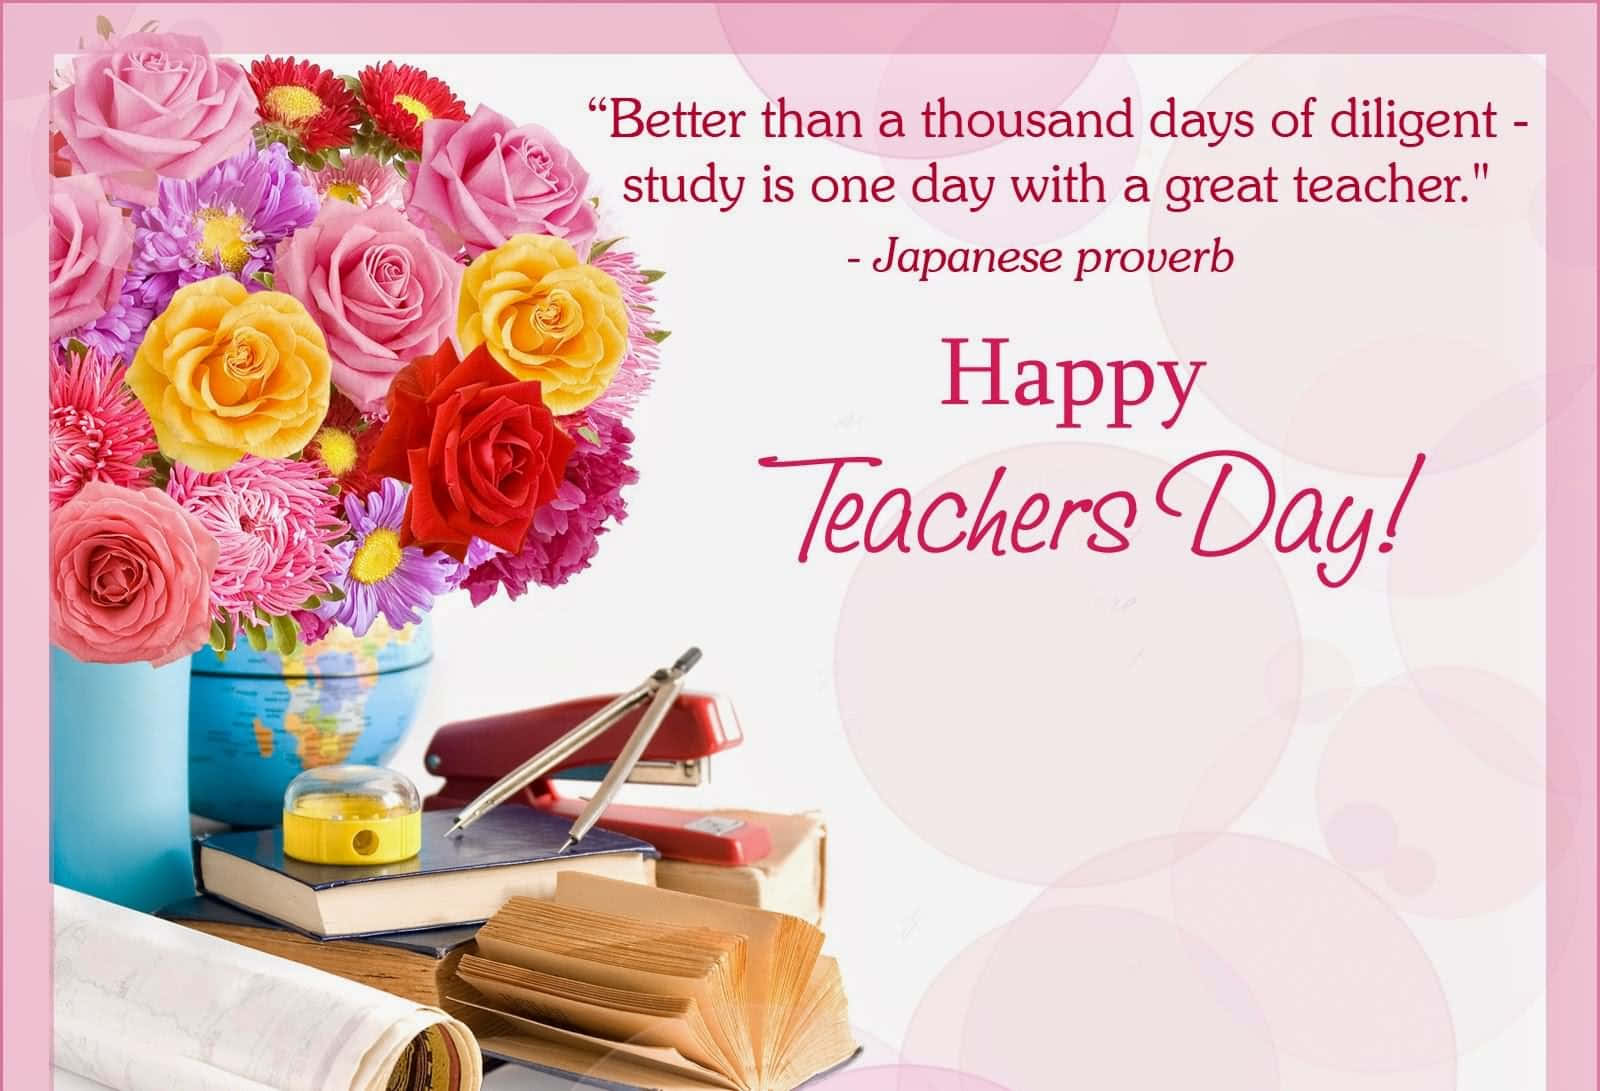 Celebrate Teachers Day in style